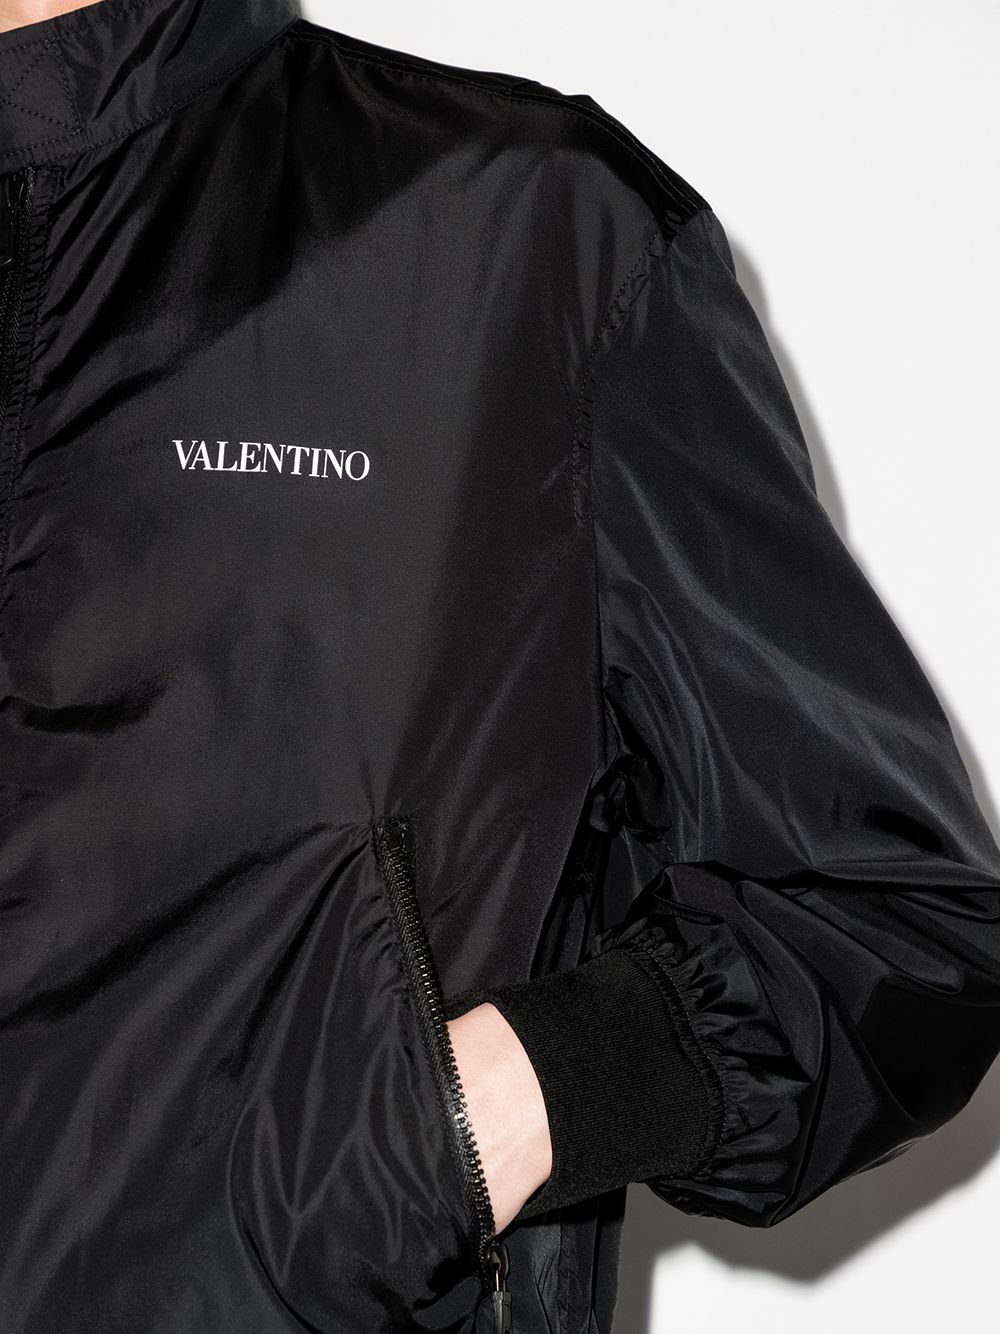 фото Valentino бомбер на молнии с логотипом